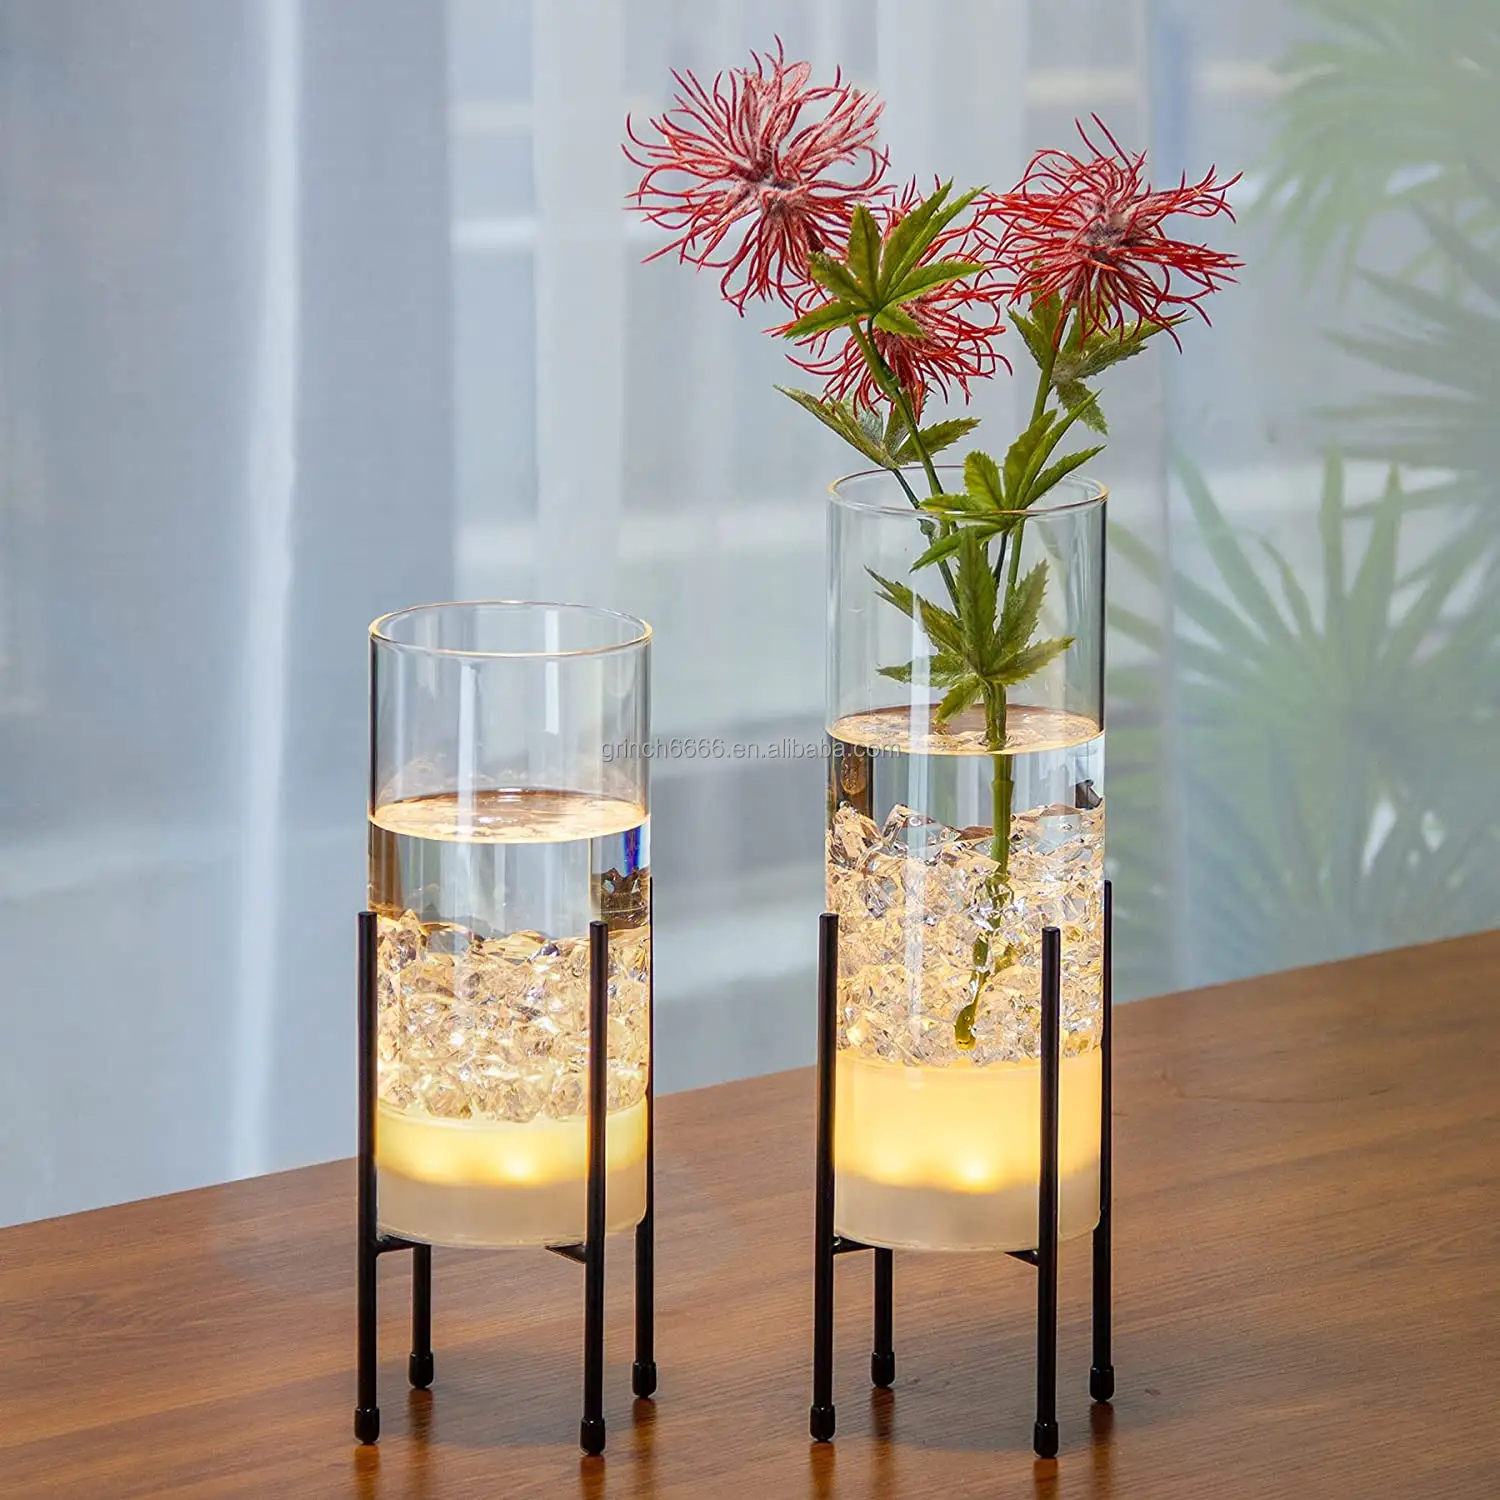 Flower Vase LED Decor Glass Table led Vase Set for Flowers Plants Centerpiece Wedding Party Decorative Vase with LED lighting